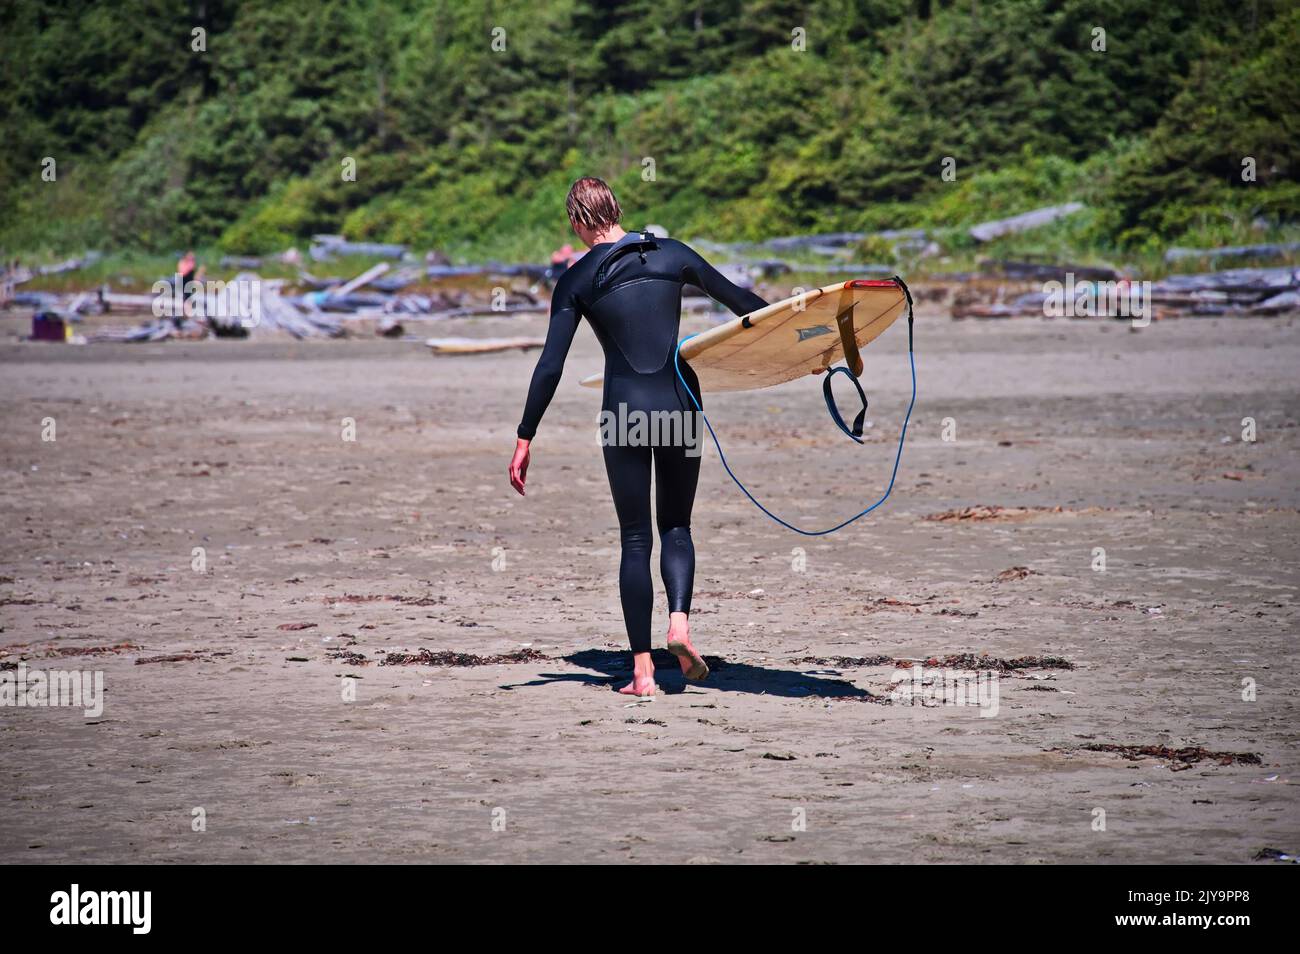 Surfer beim Strandspaziergängen in Tofino, Kanada mit dem Board Stockfoto